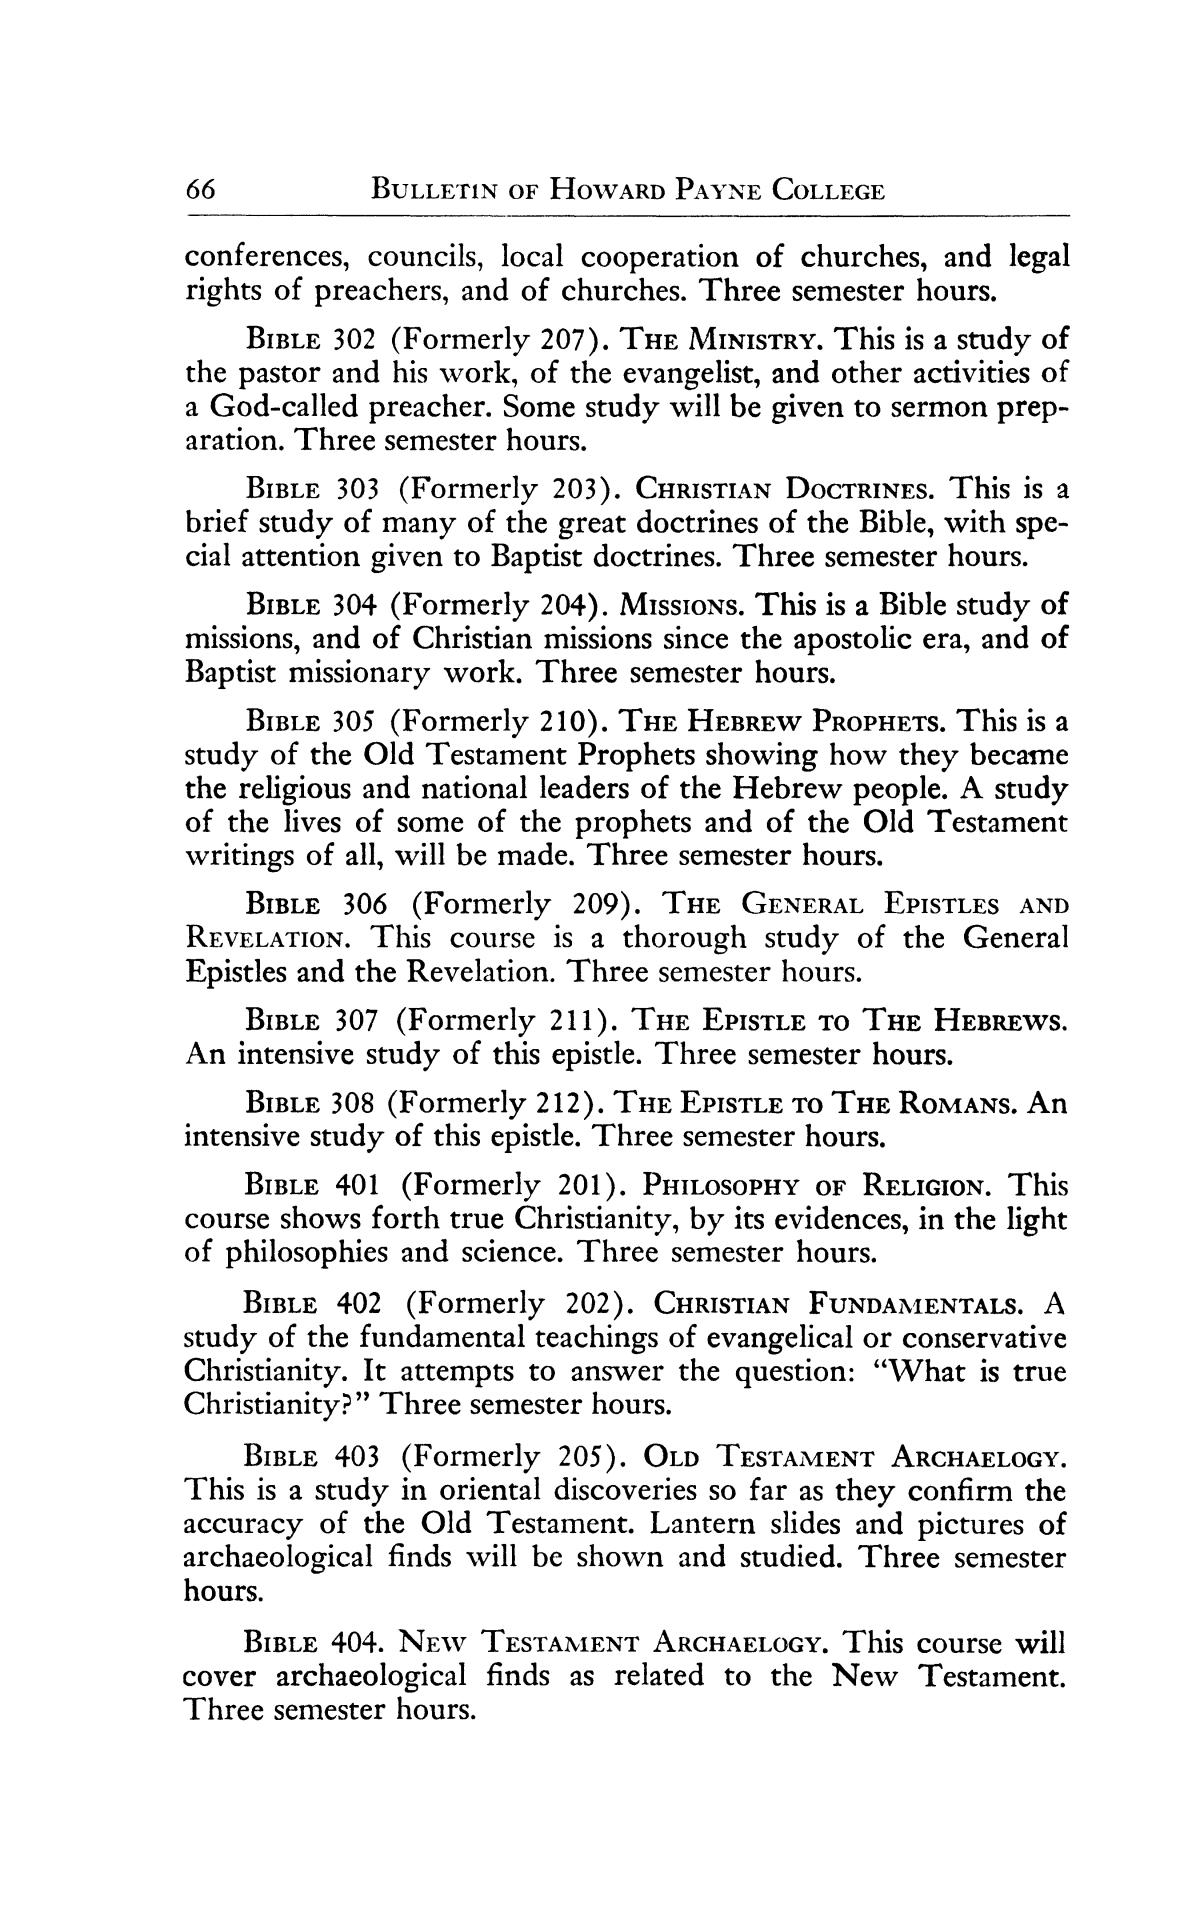 Catalog of Howard Payne College, 1954-1955
                                                
                                                    66
                                                